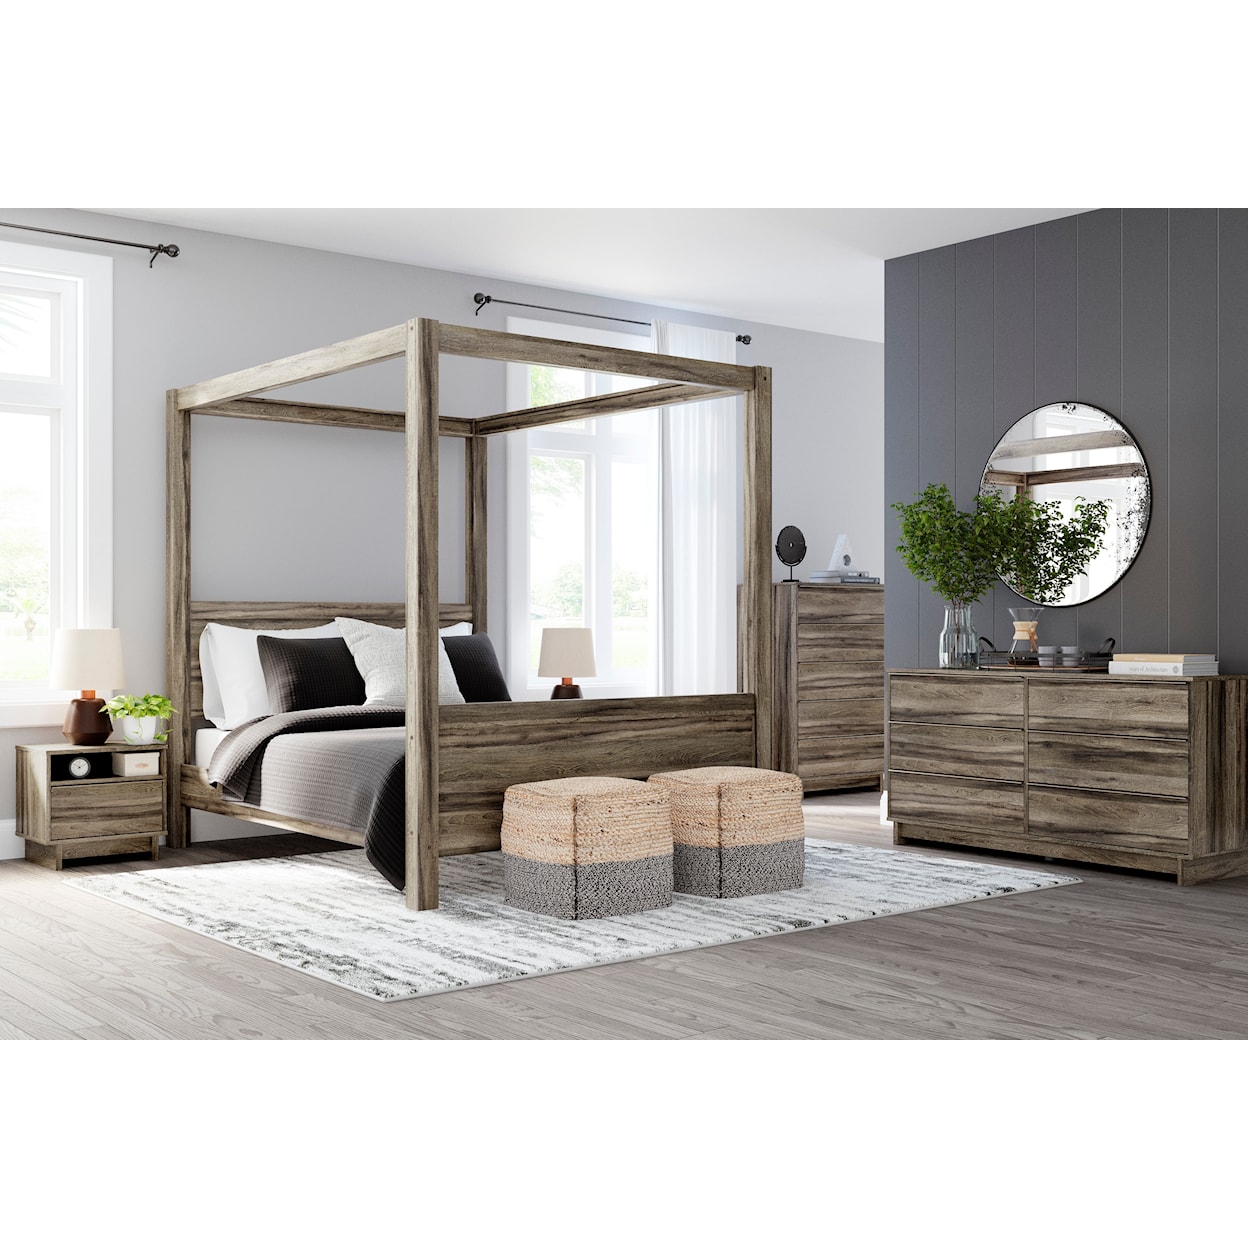 Ashley Furniture Signature Design Shallifer Queen Bedroom Set